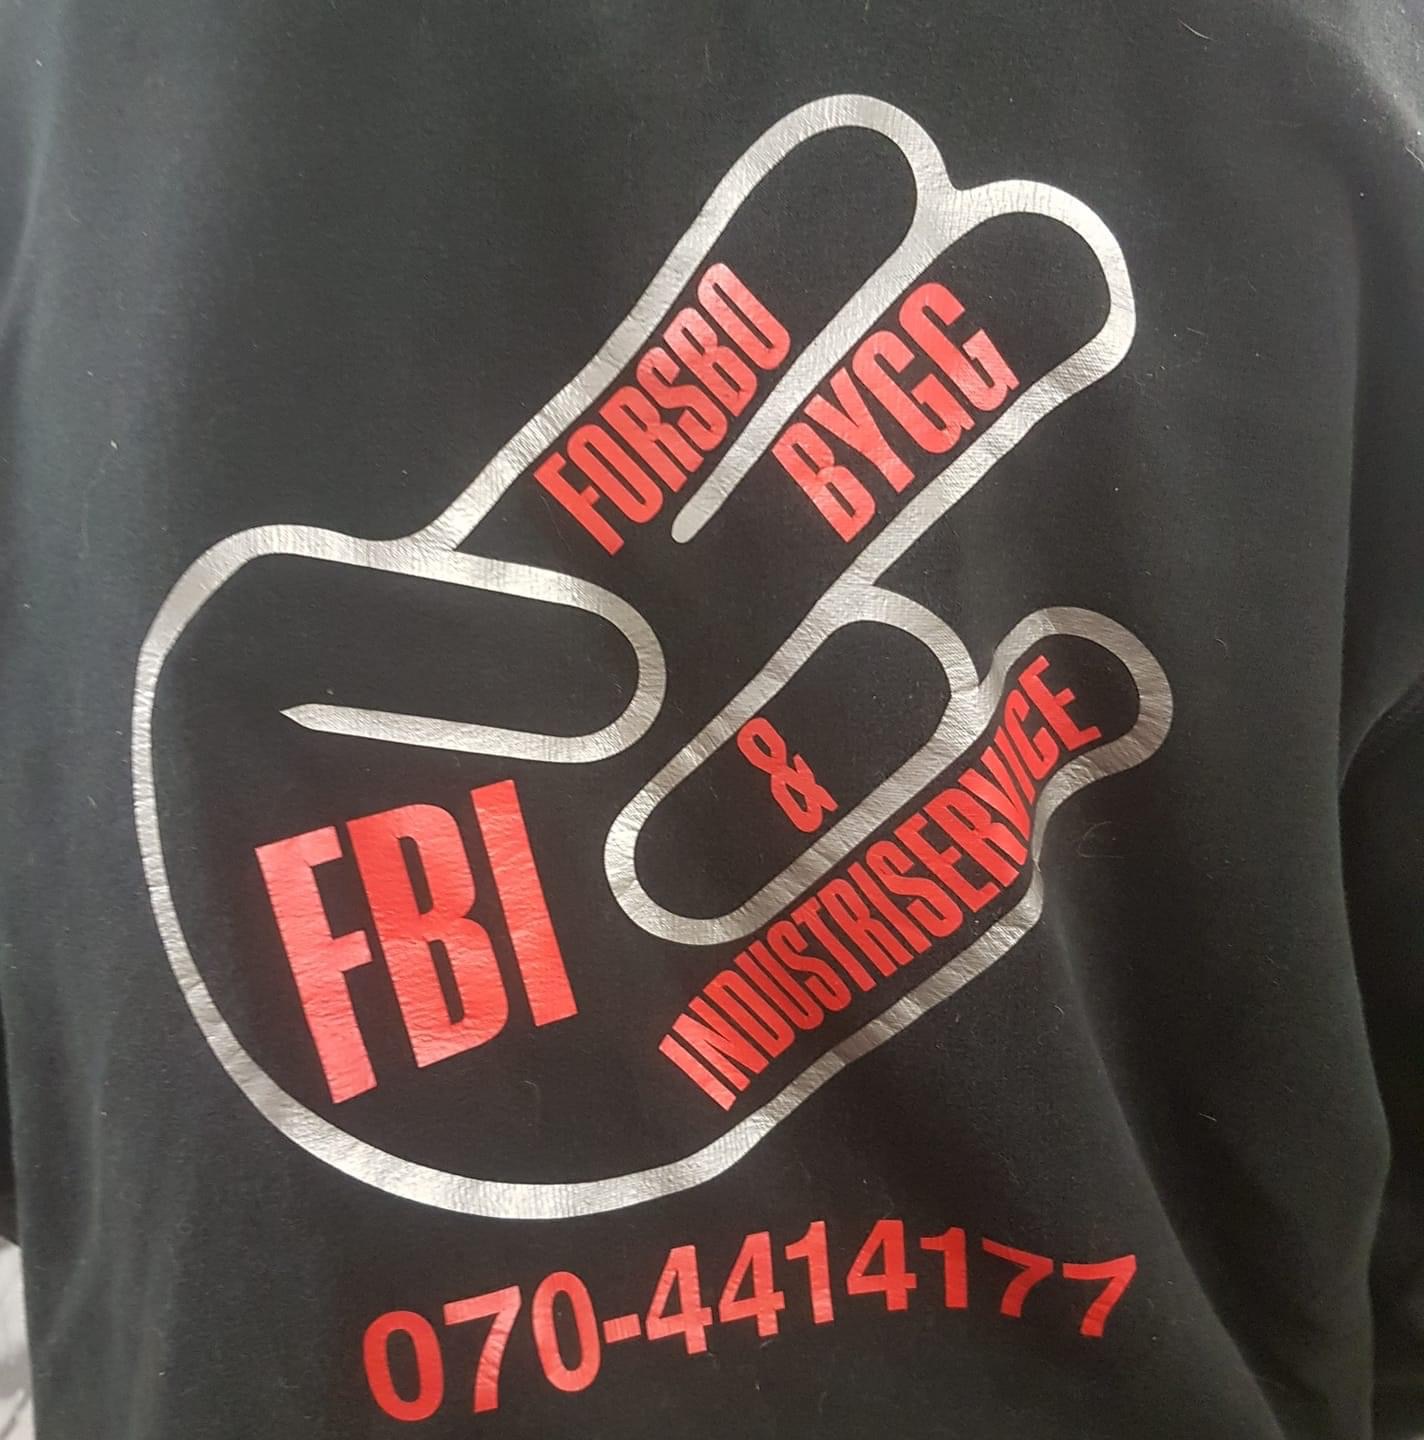 FBI forsbo bygg och industriservice 